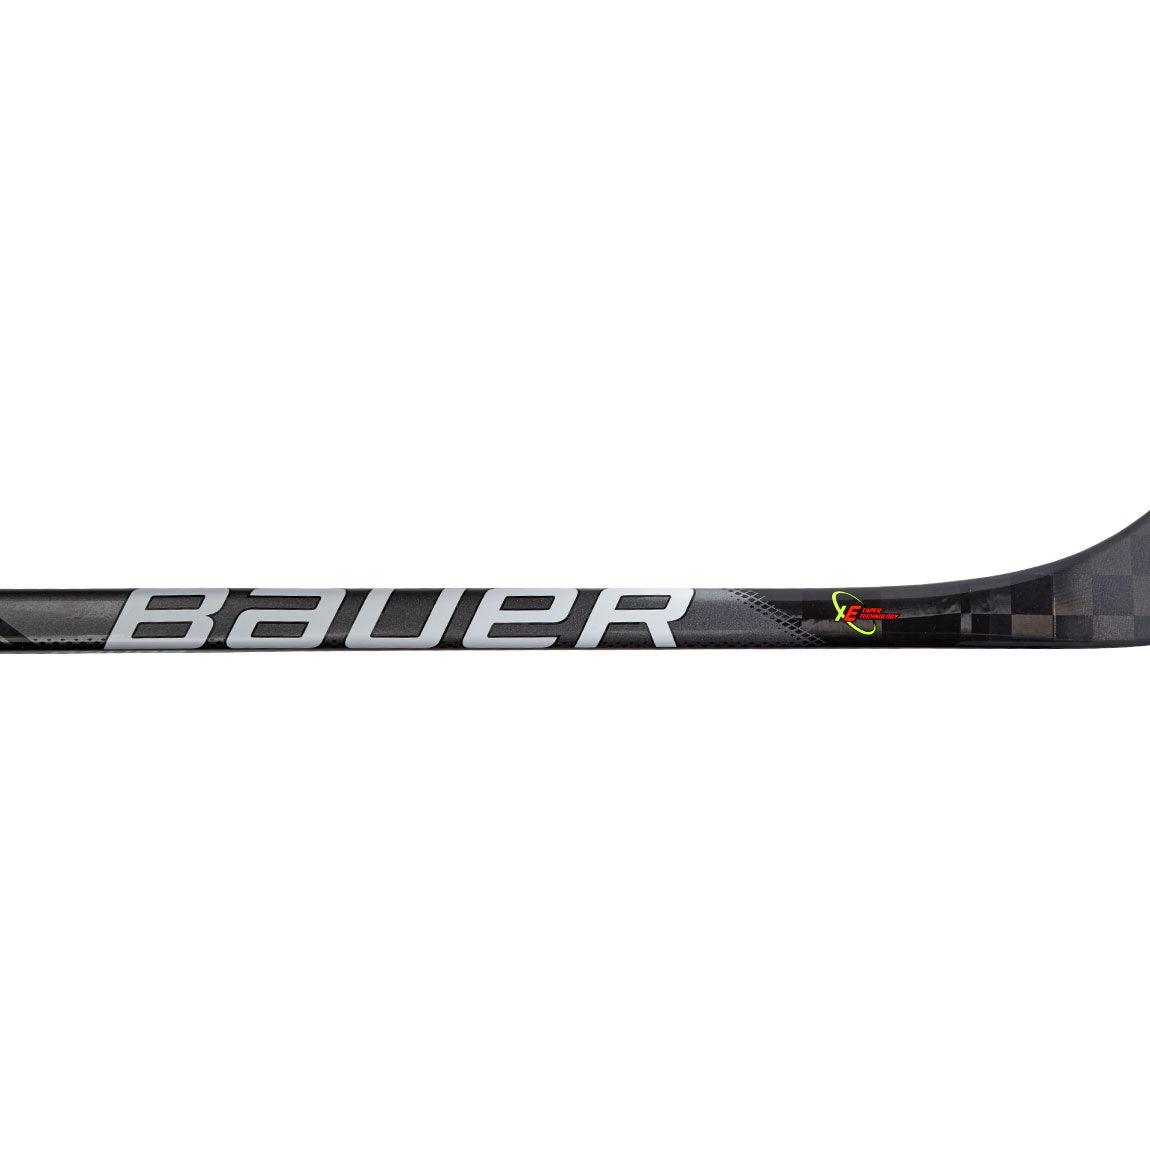 Vapor Flylite 52" Hockey Stick - Junior - Sports Excellence